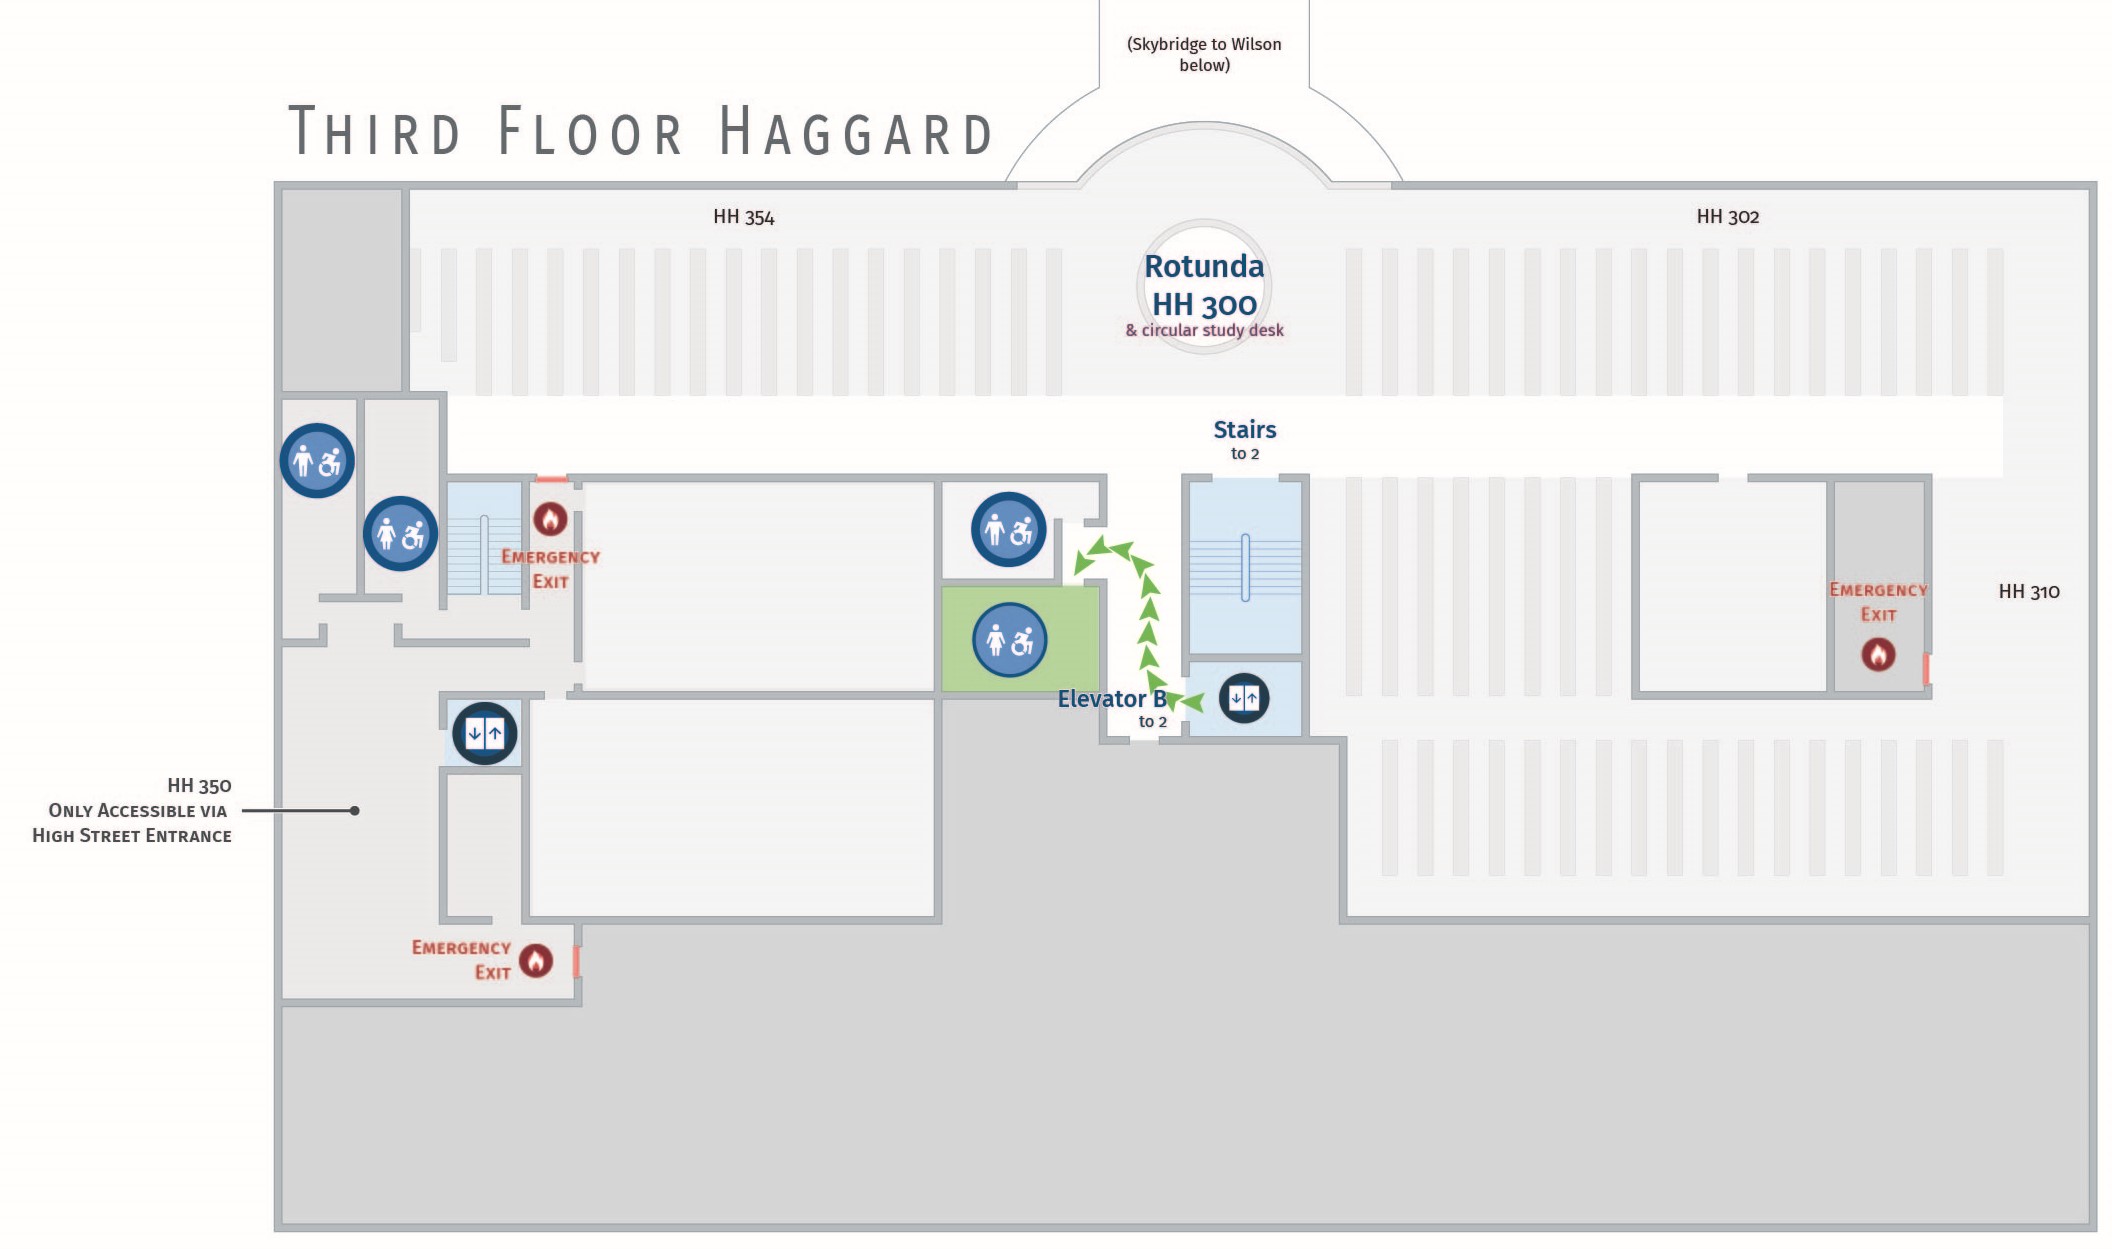 Floor plan, third floor of Haggard with accessible path to women's restroom. Haggard 342.